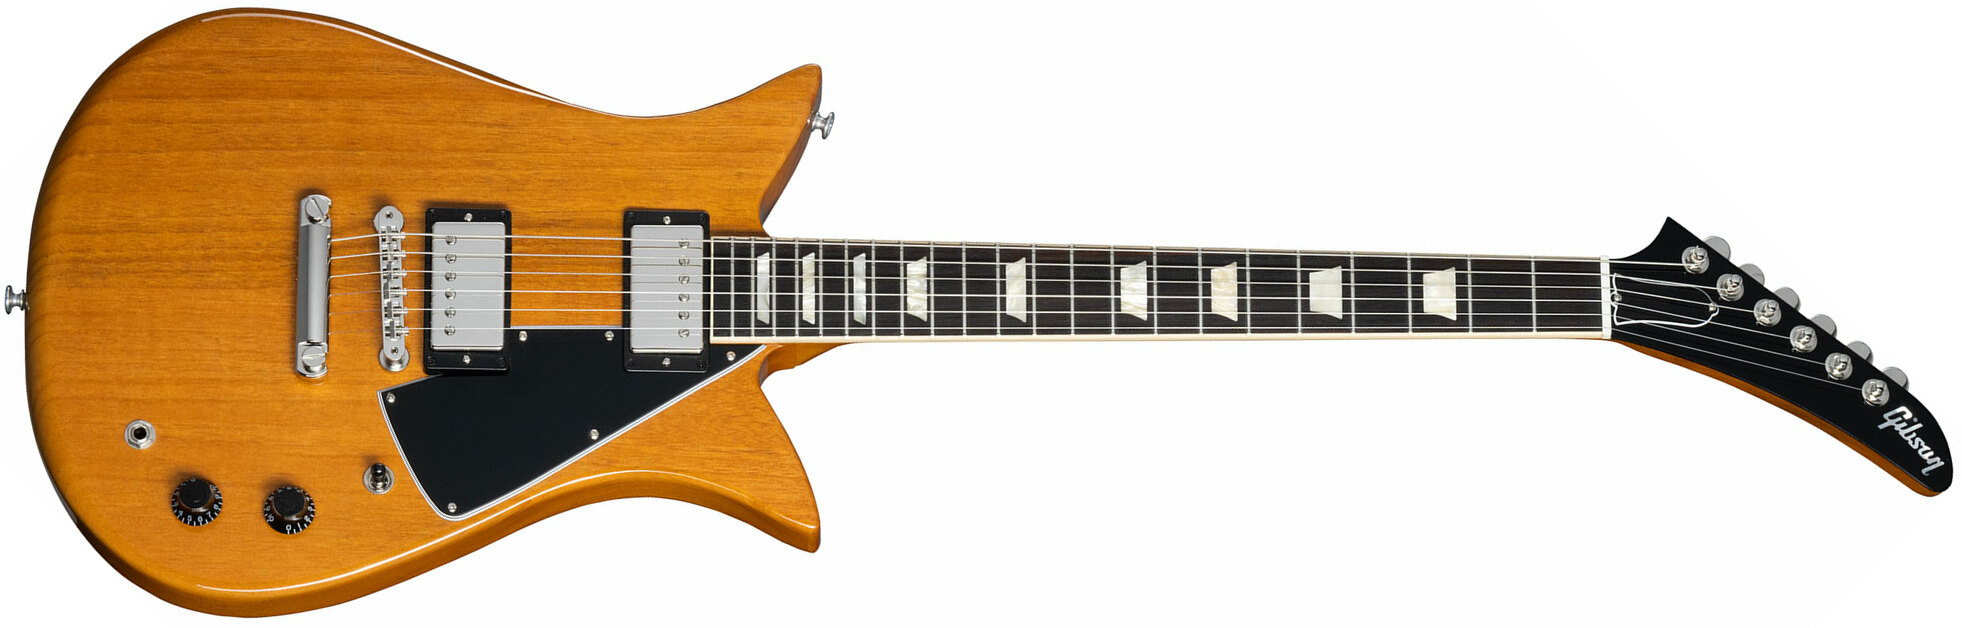 Gibson Theodore Standard Original 2h Ht Rw - Antique Natural - Guitarra electrica retro rock - Main picture